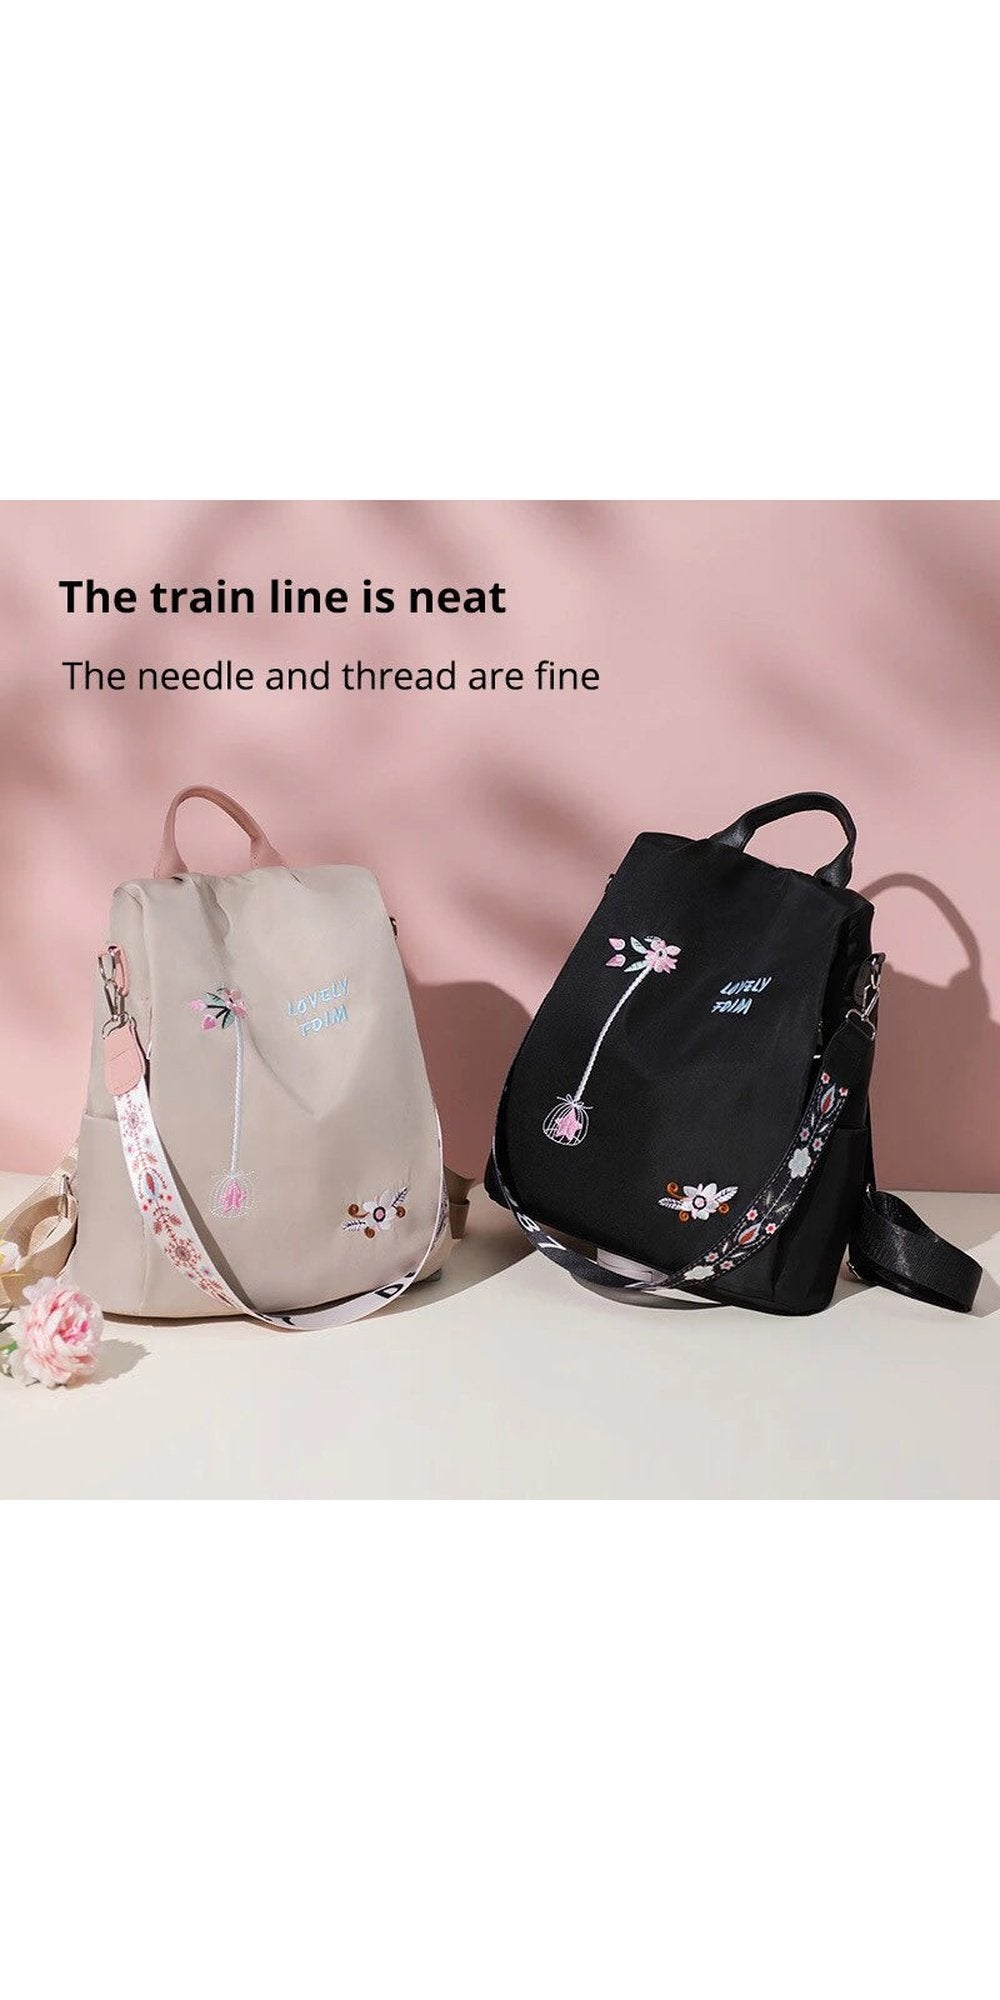 Waterproof Oxford Women Backpack Fashion Casual Embroidery Bag Designer Female Large Capacity Travel Handbag Shopping Knaps